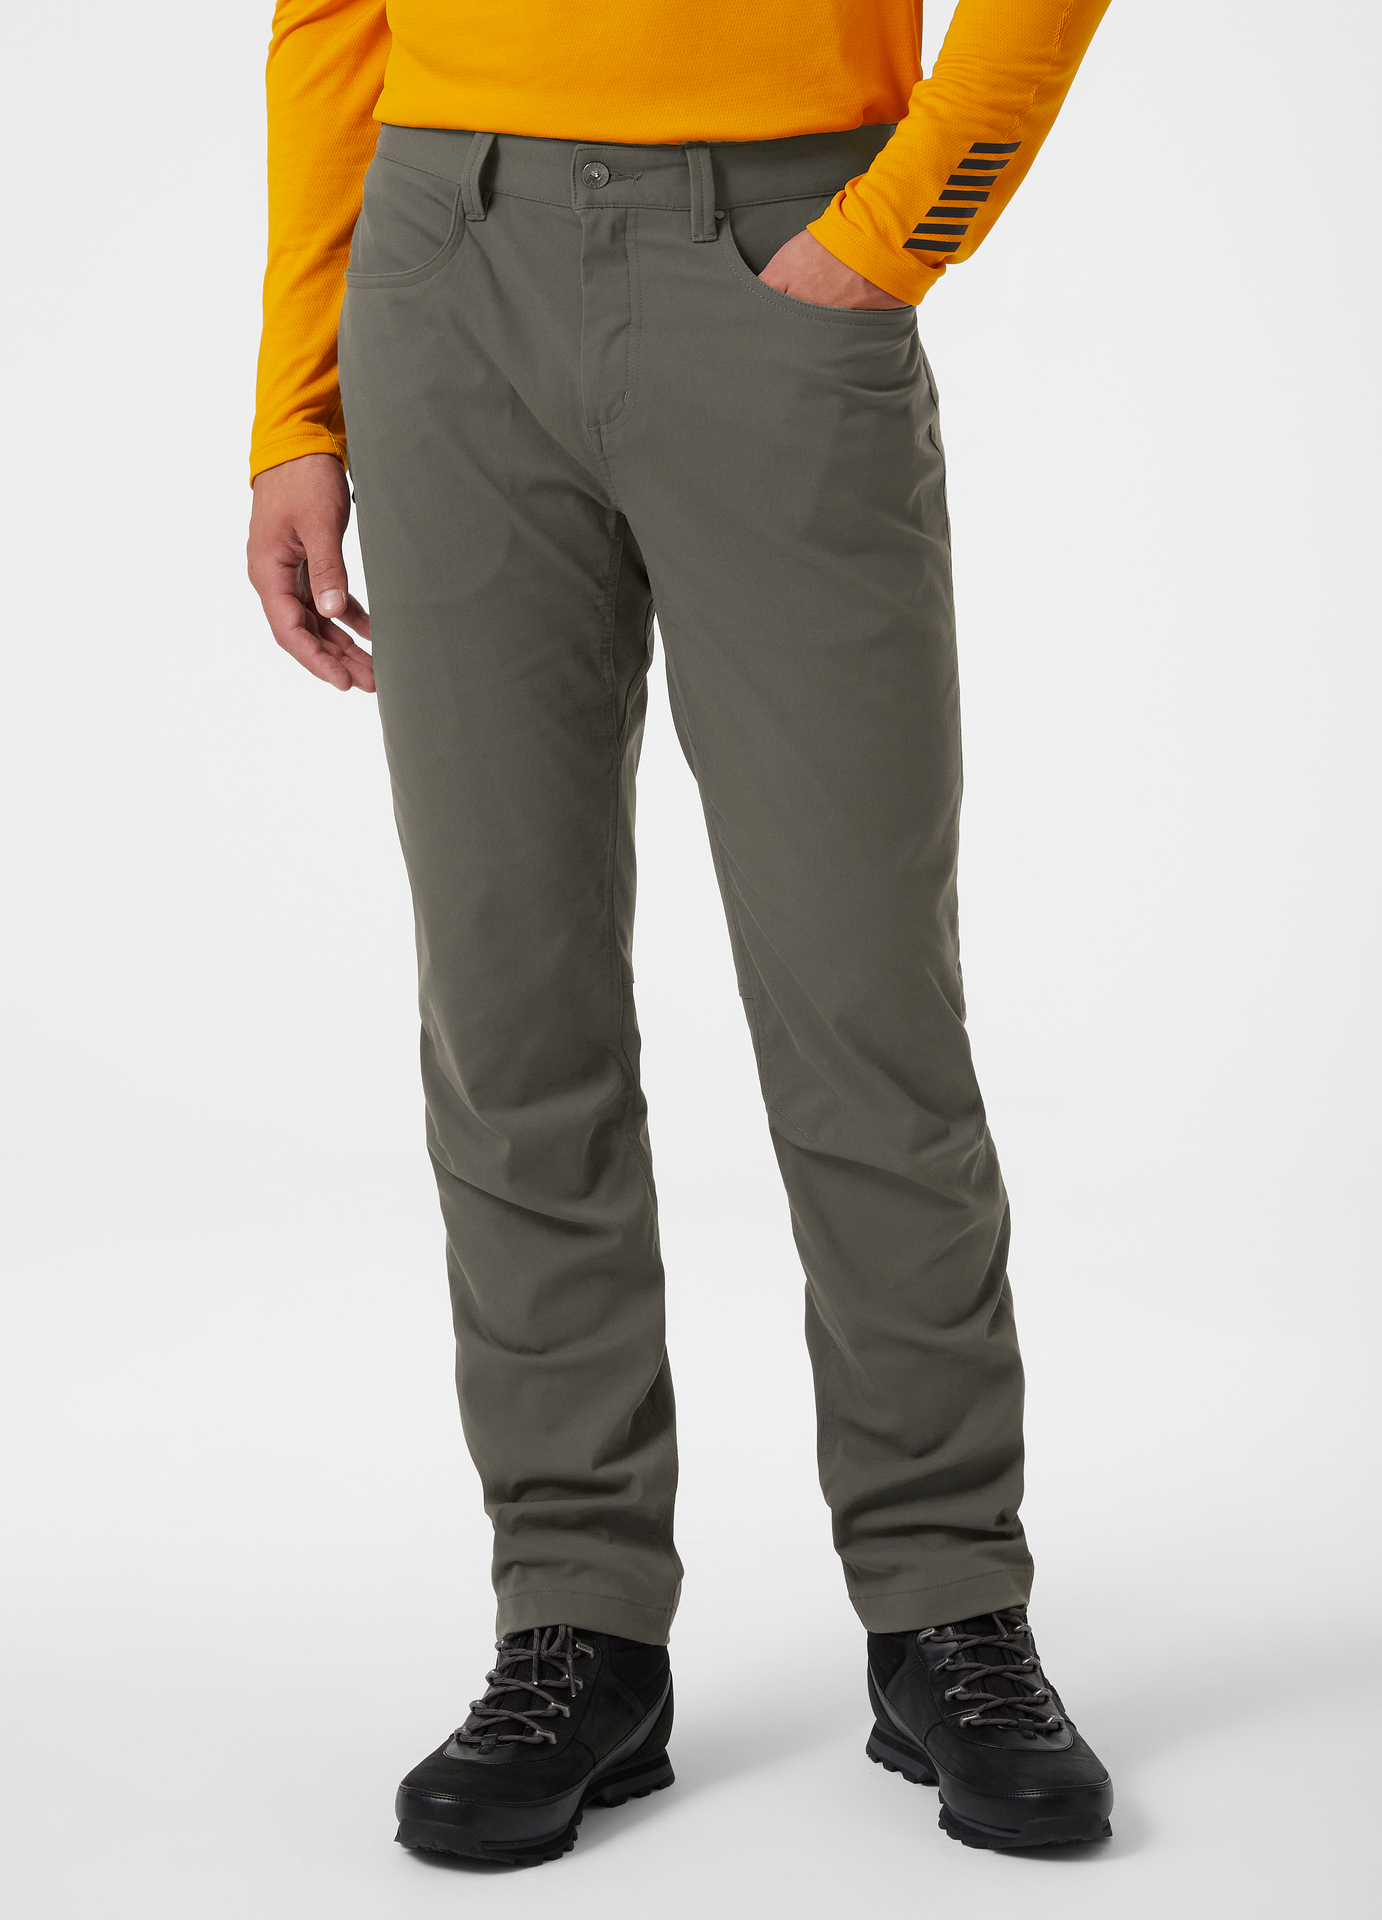 מכנסי גברים הולמן 5 כיסים | Men's Holmen 5 Pocket Pants